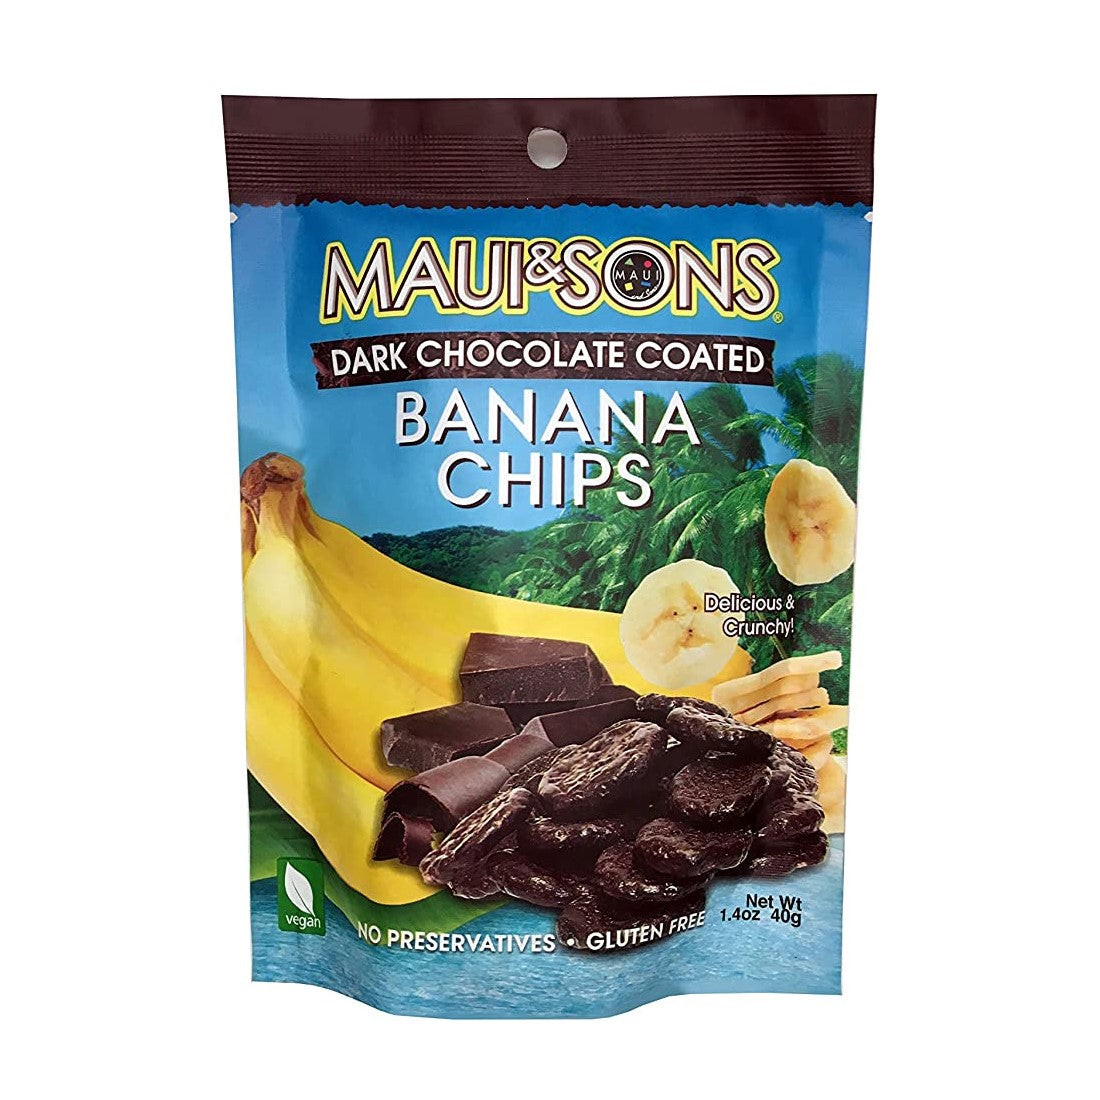 Maui & Sons Dark Chocolate Coated Banana Chips 1.4oz